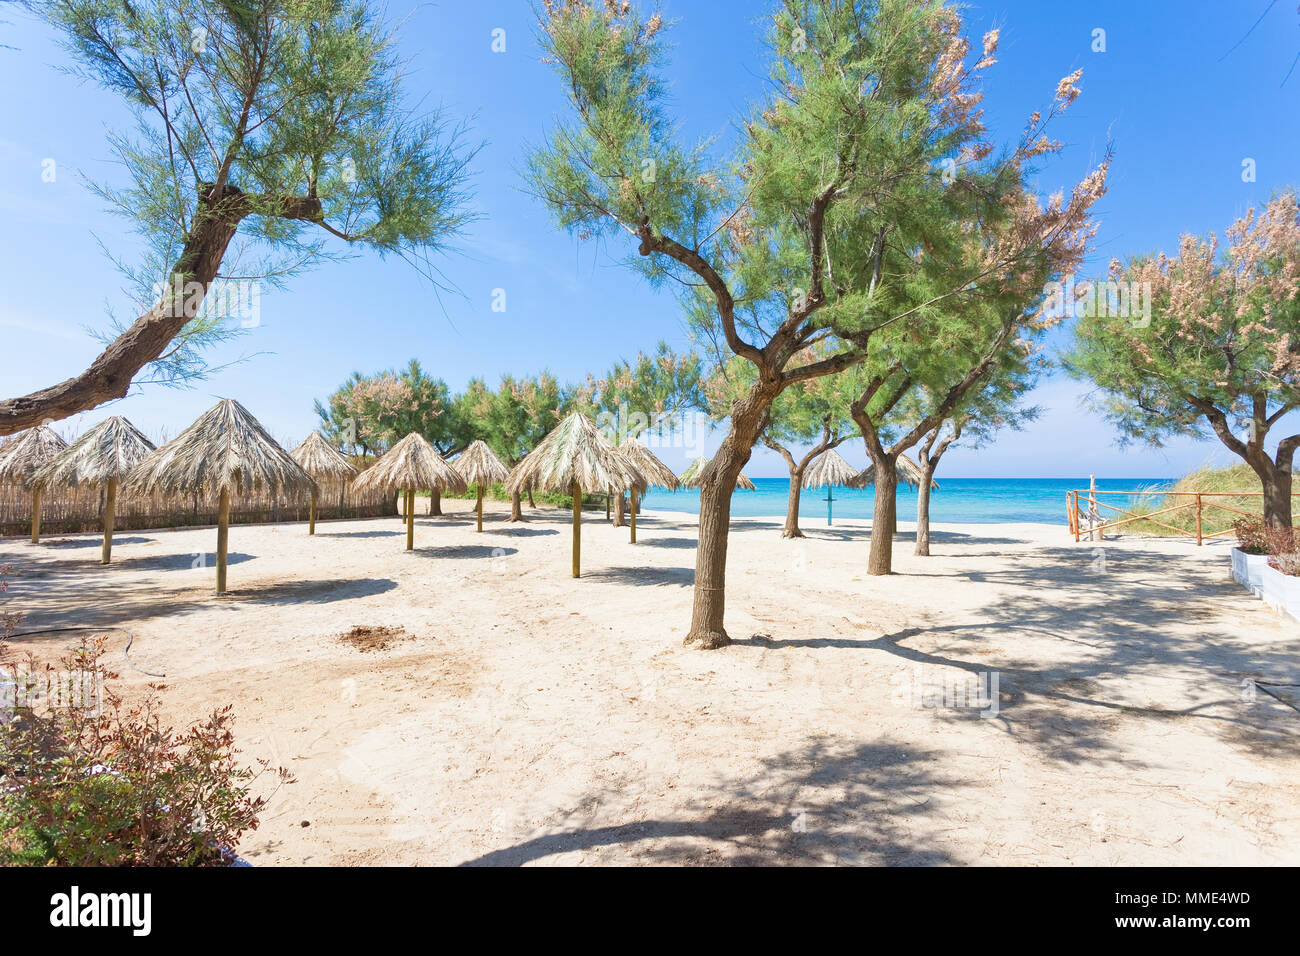 Spiaggia Terme, Apulia, Italy - Visiting the beautiful beach of Spiaggia Terme Stock Photo